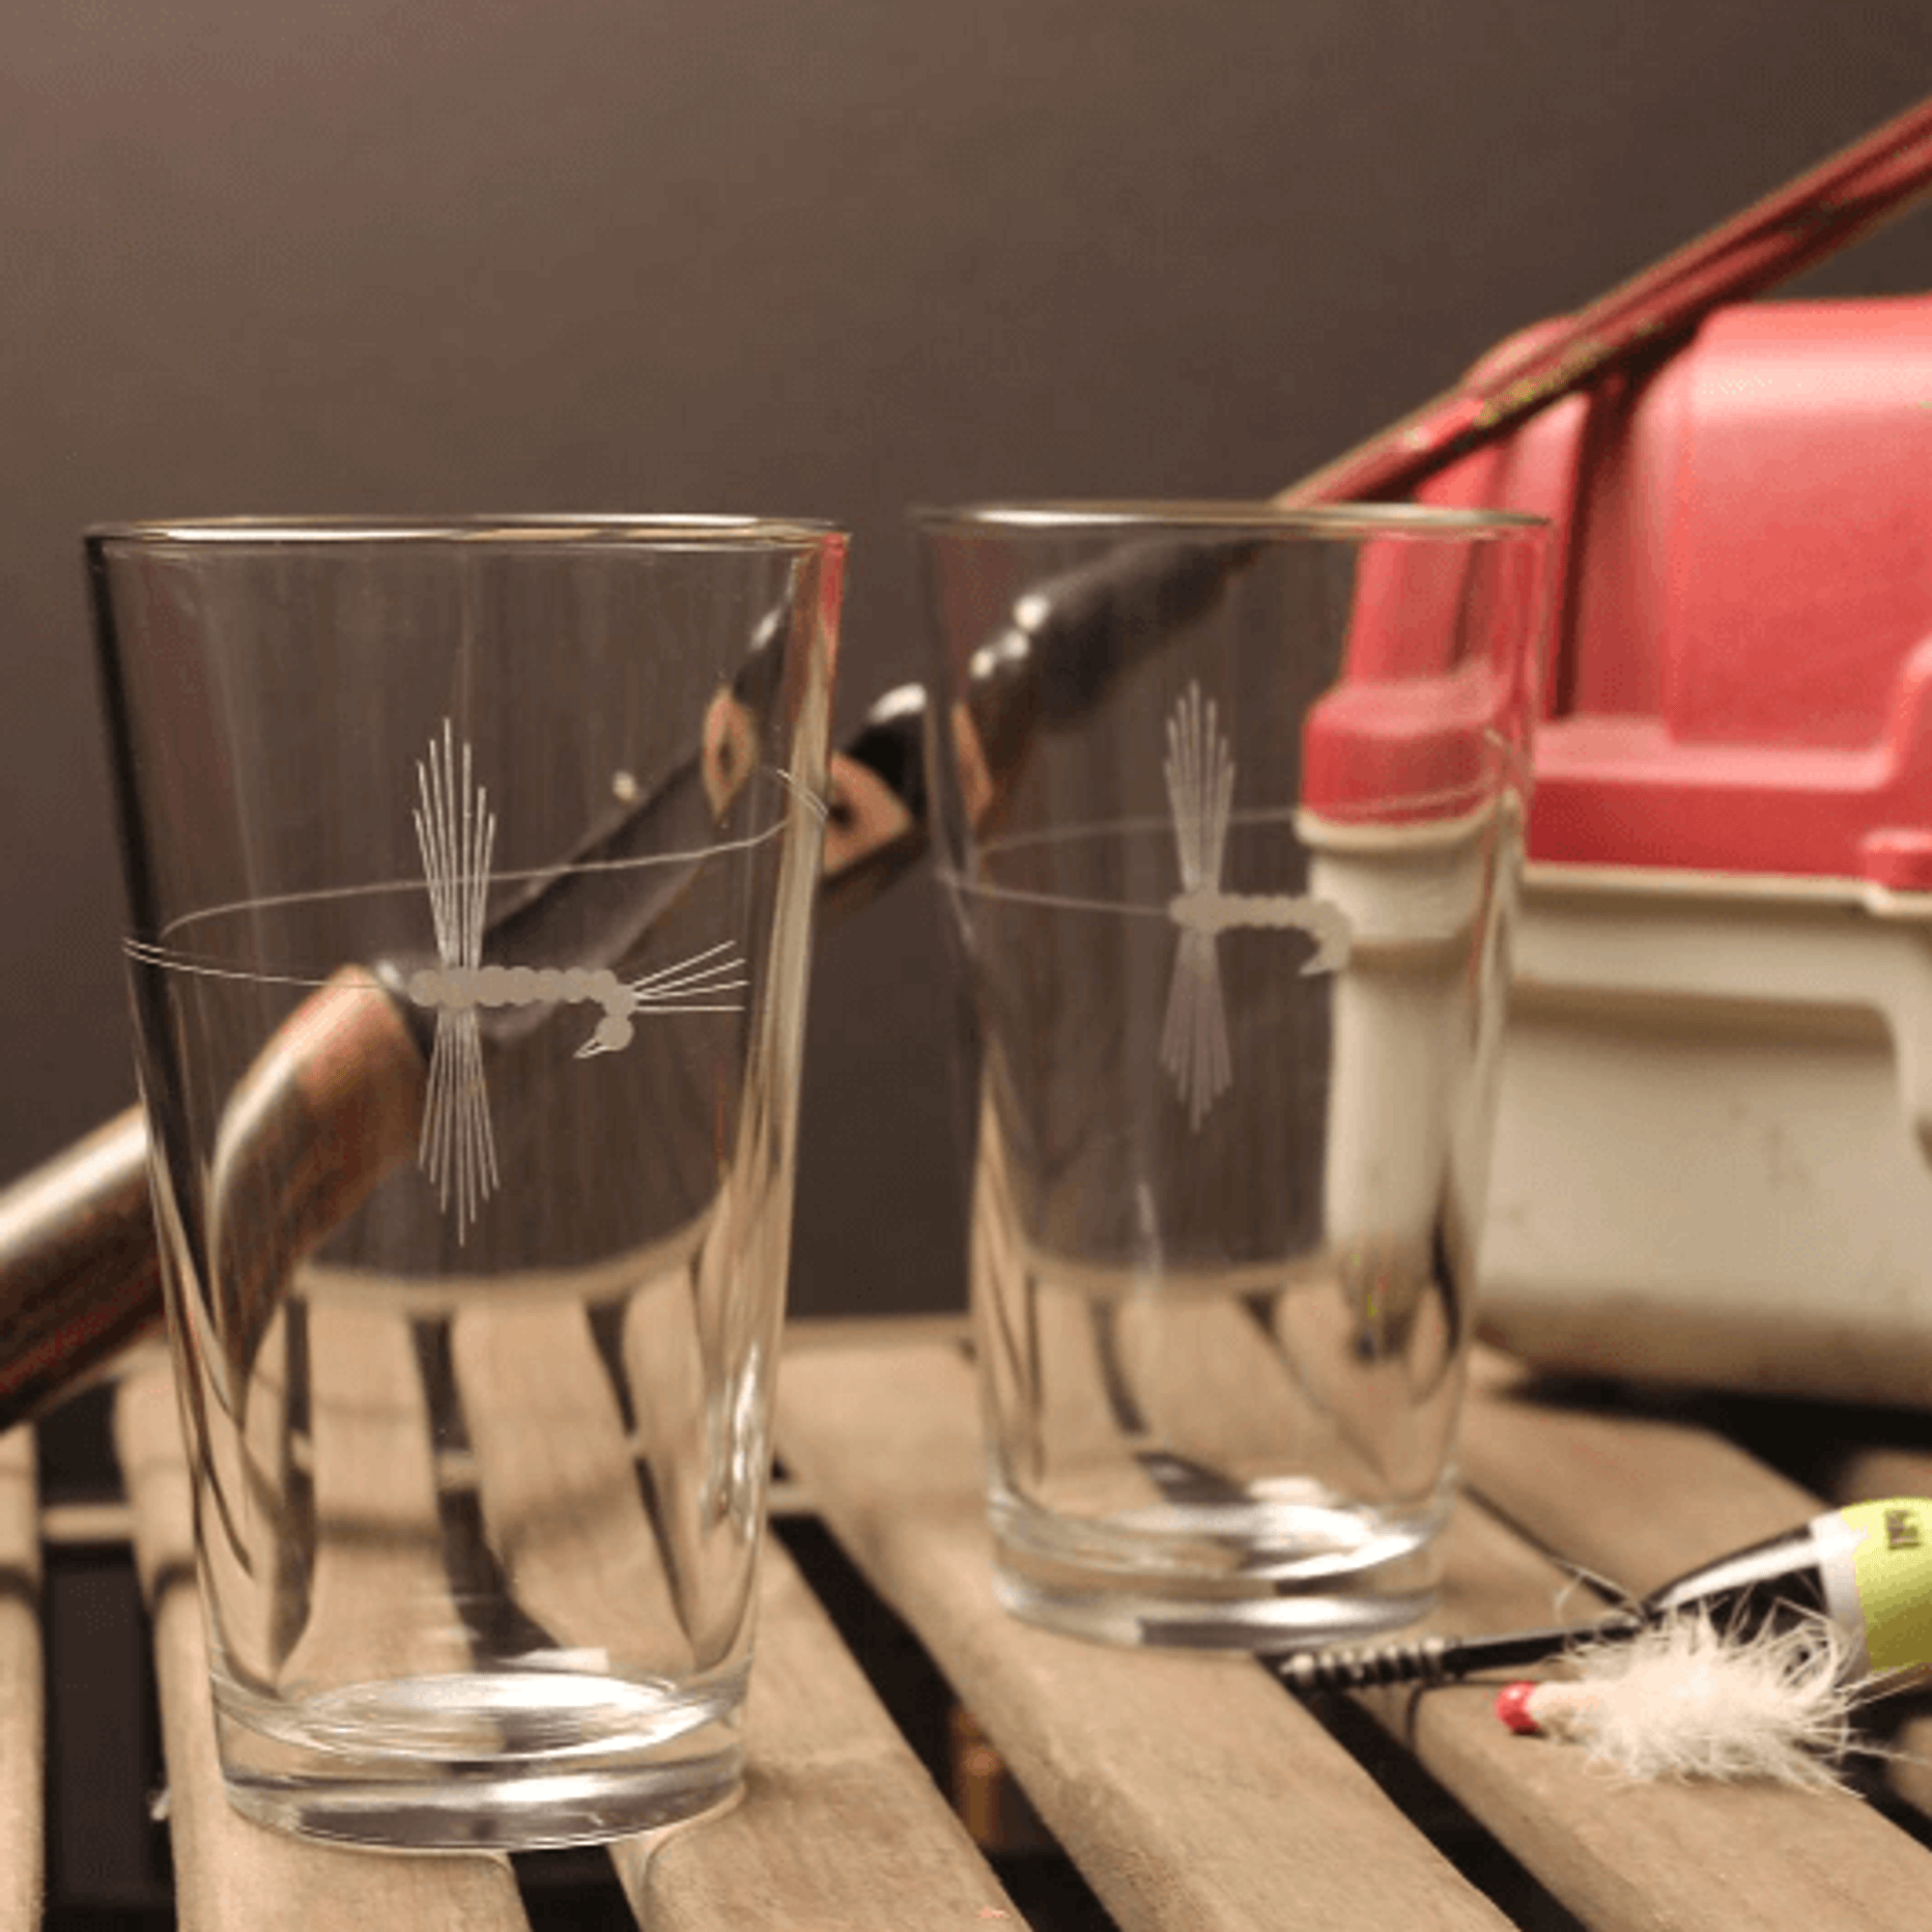 Rolf Glass Fly Fishing Pint Glass 16oz - Set of 4 Glasses